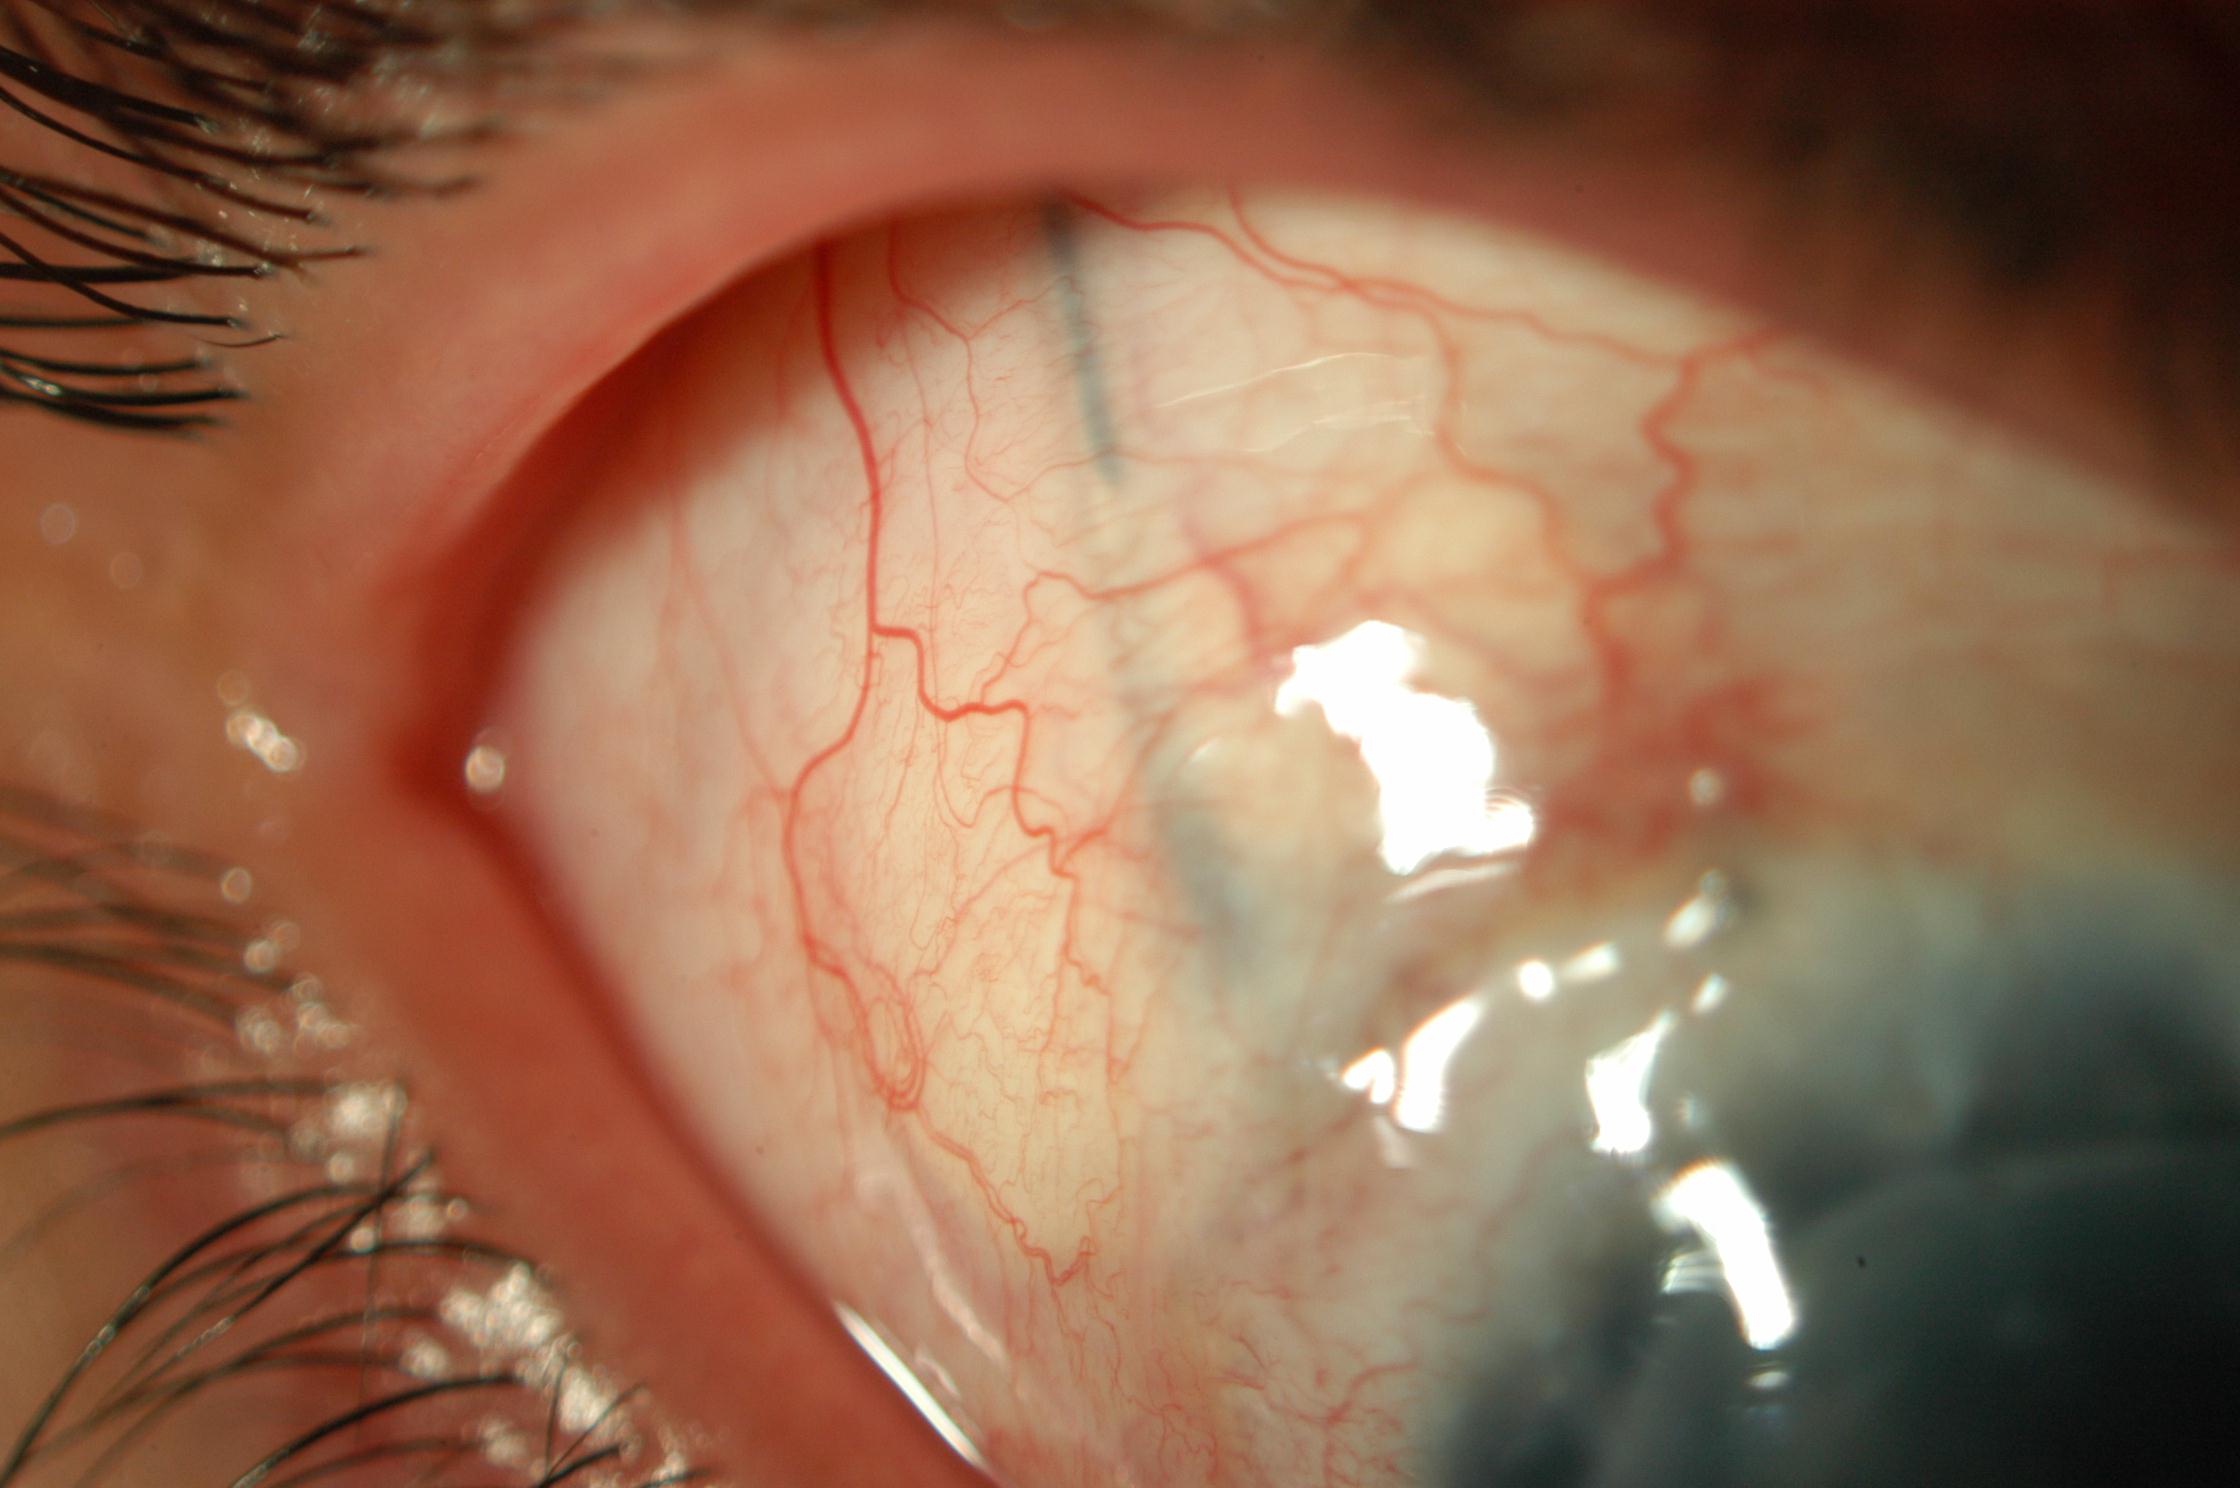 Figure 3.1.2 The Appearance of a Baerveldt Glaucoma Drainage Device on Downgaze